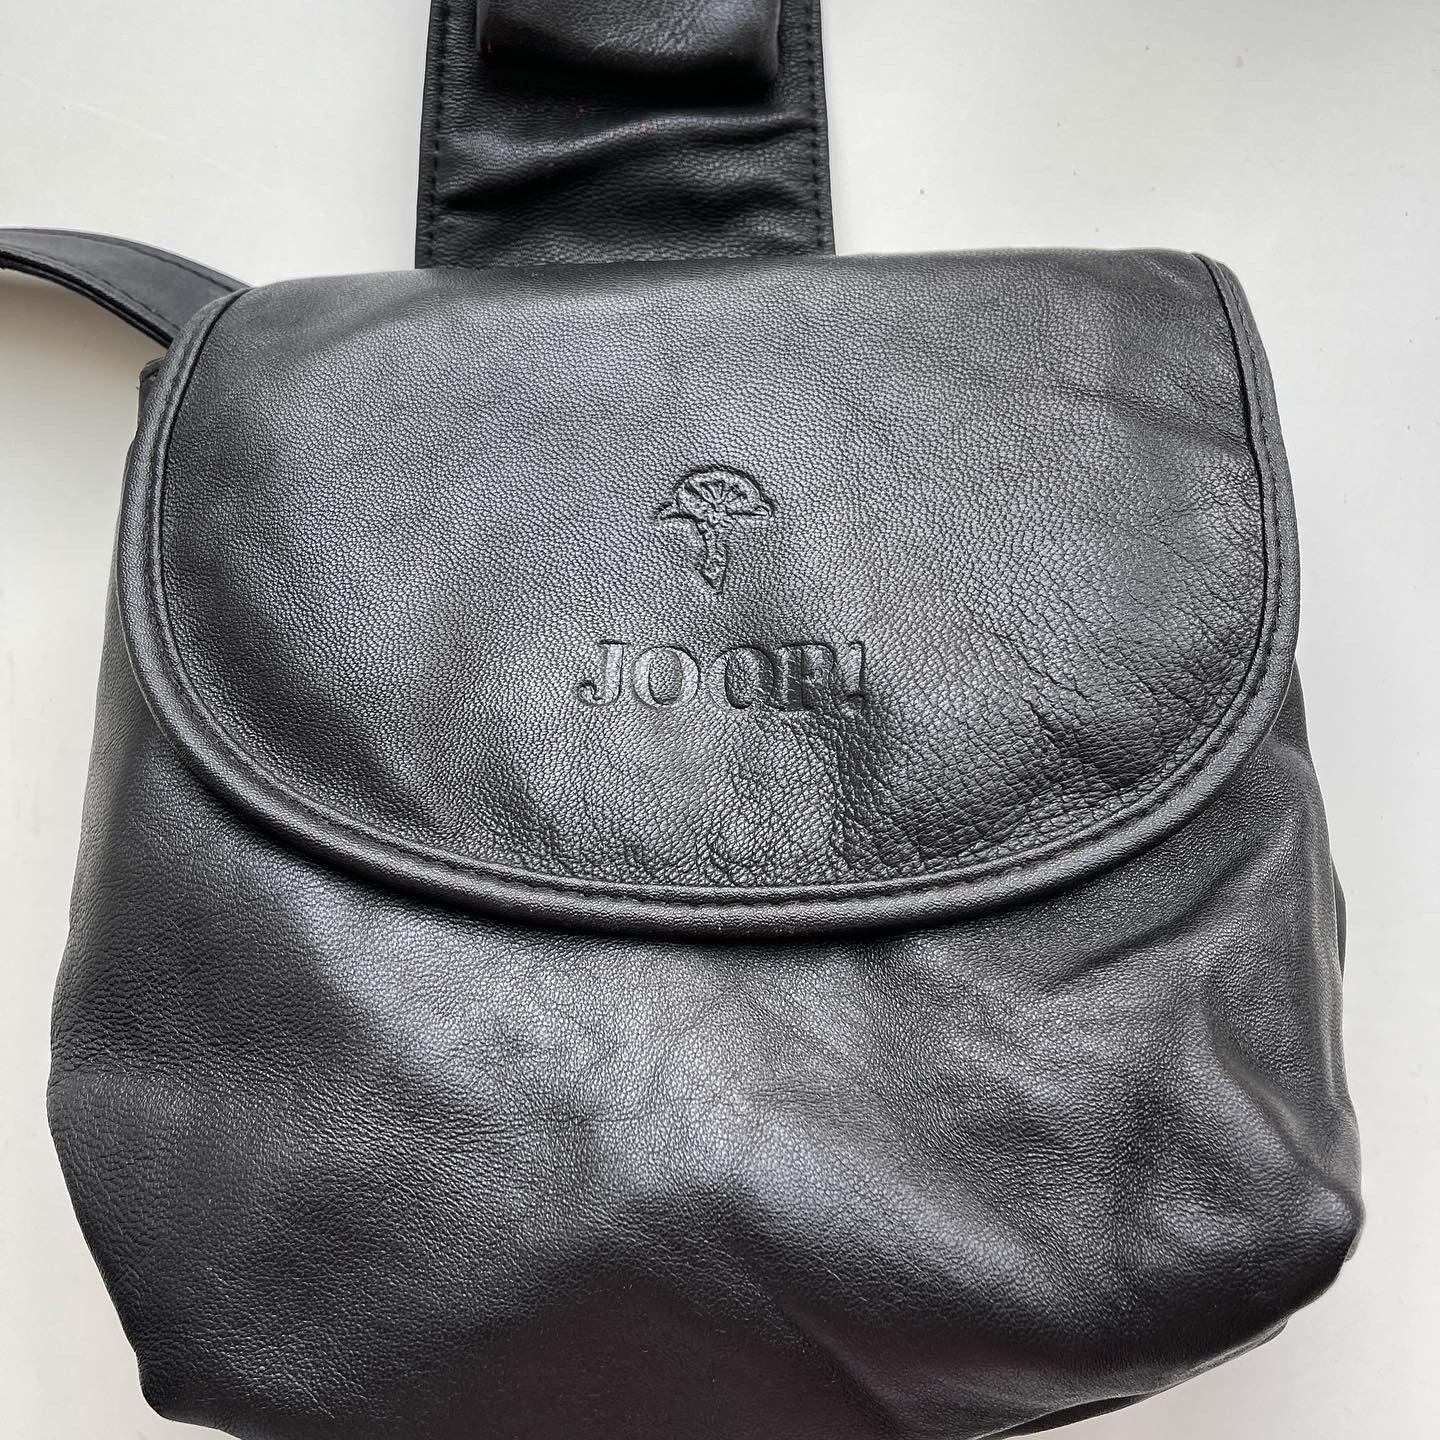 JOOP! - JOOP! Vintage Crossbody Bag look - AVVIIVVA.COM